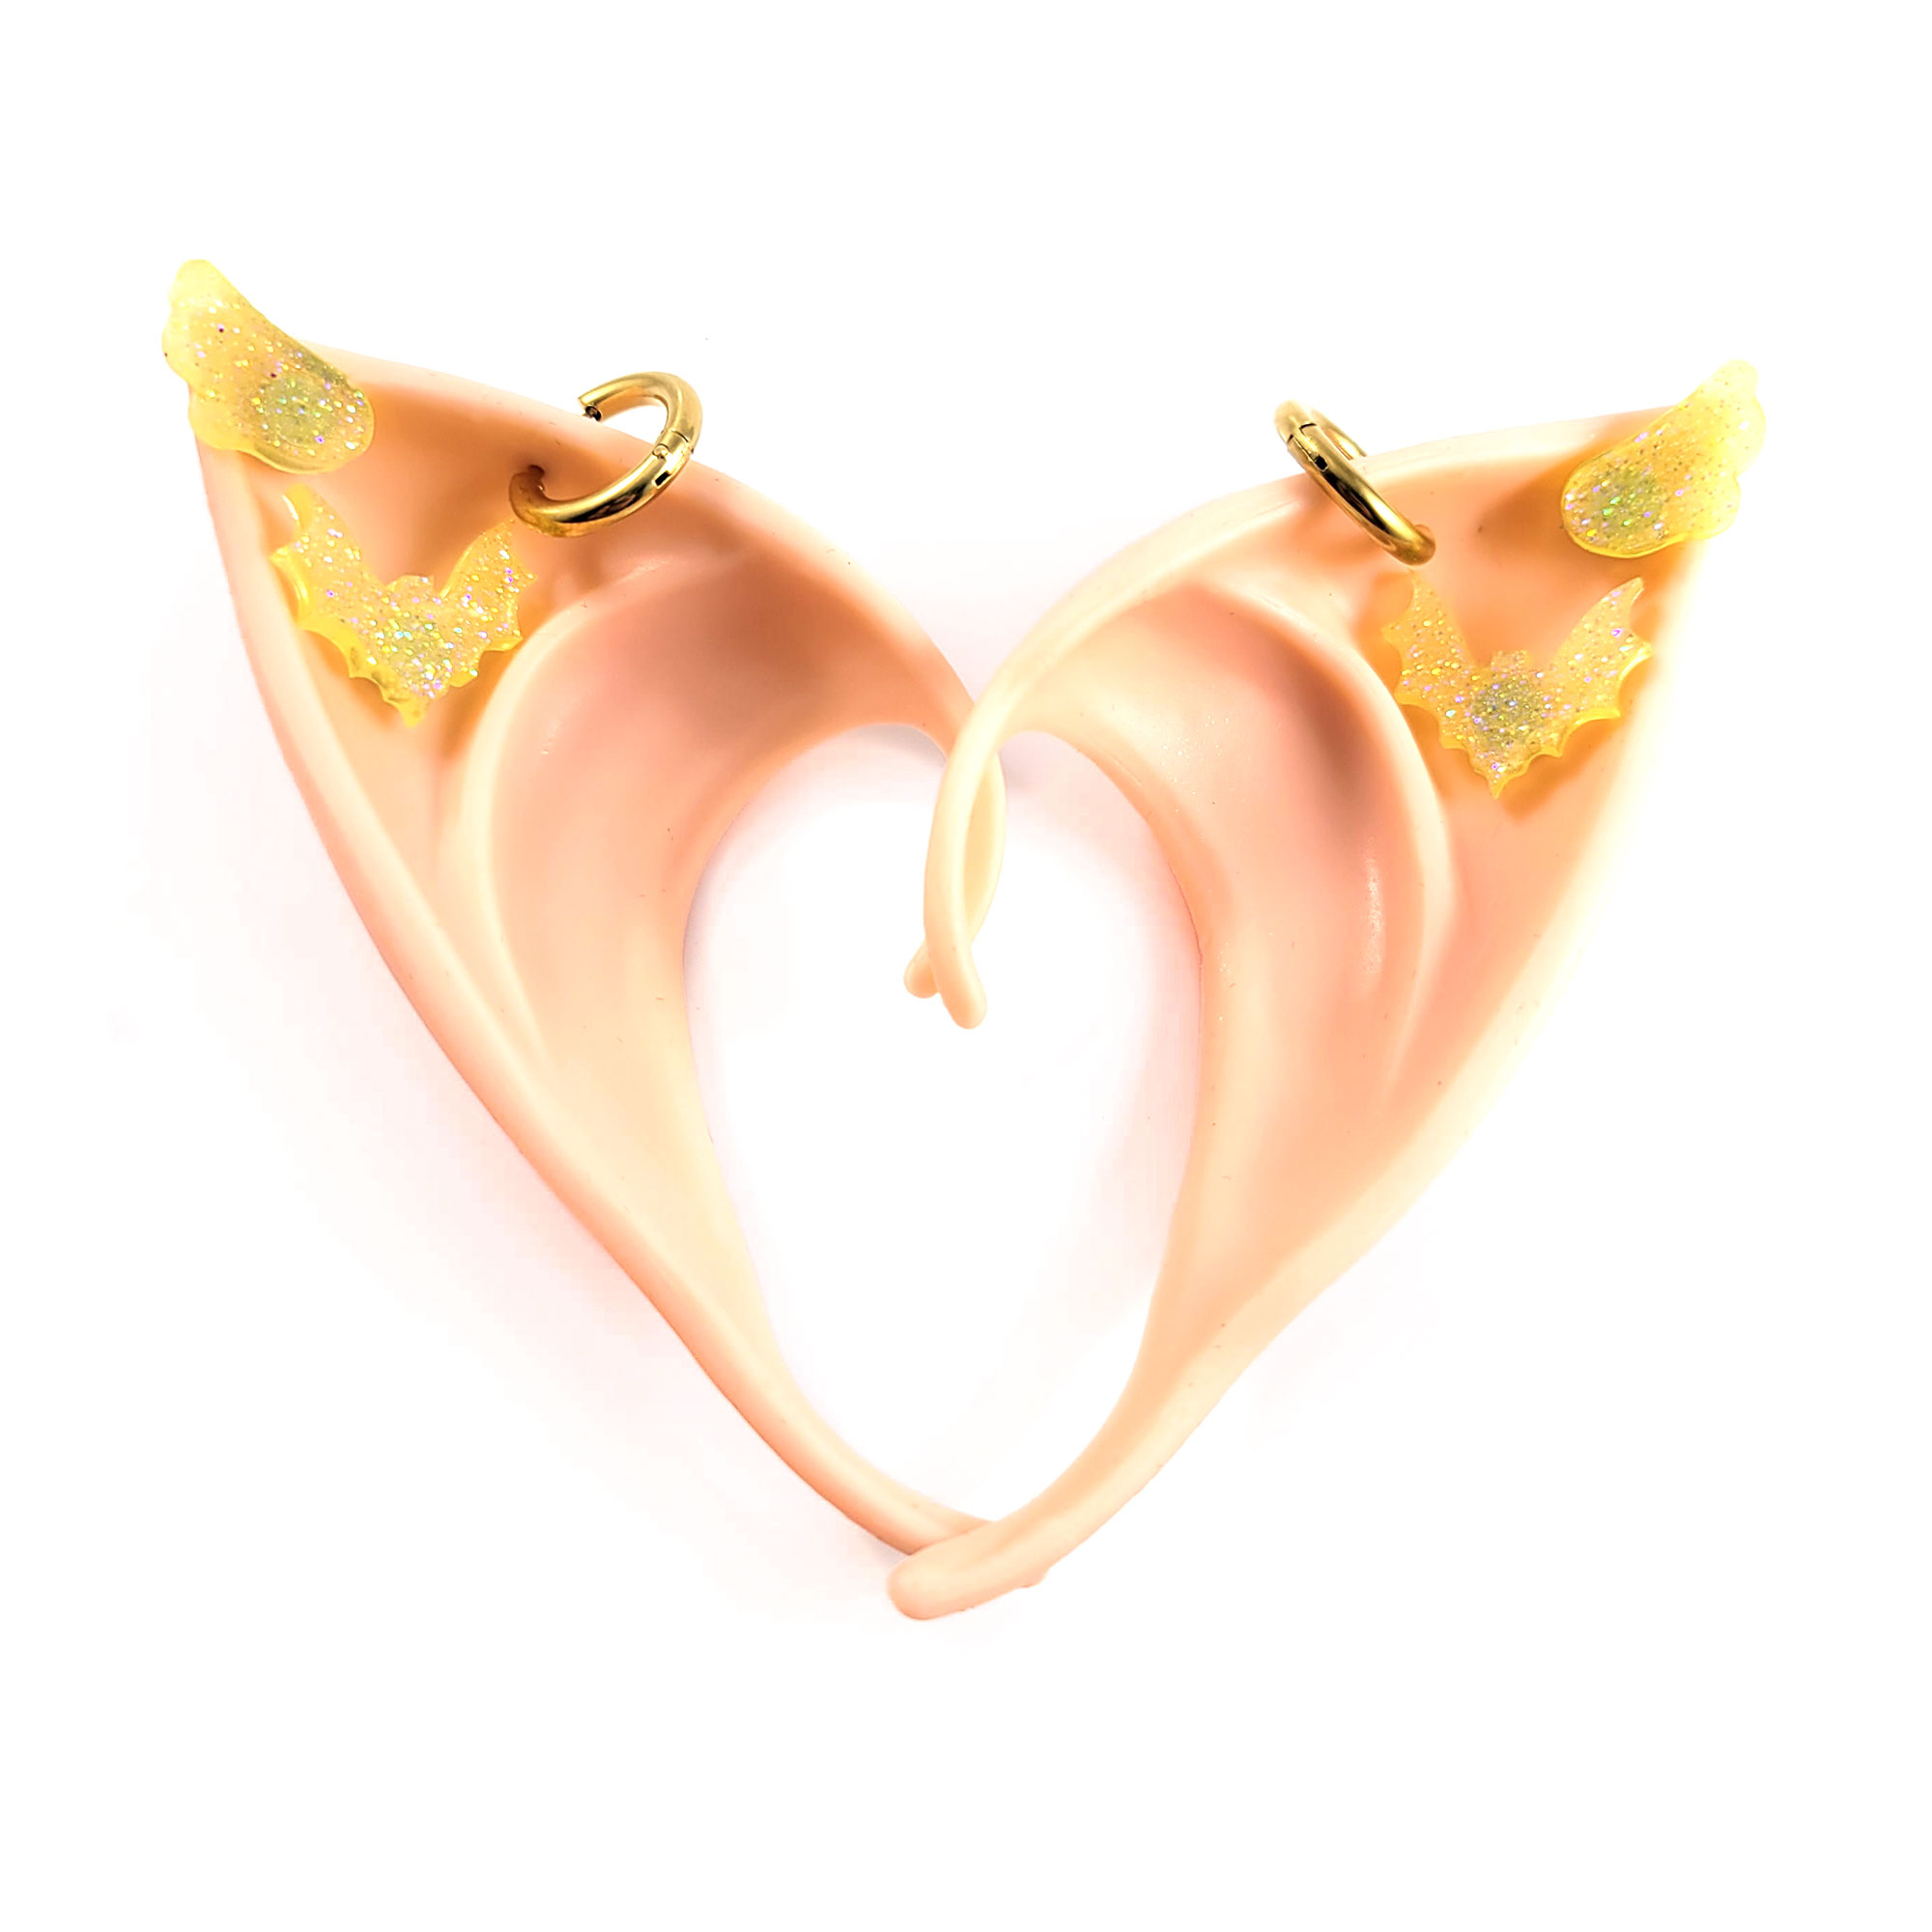 Peach Elf Ears with Neon Yellow Earrings by Wilde Designs